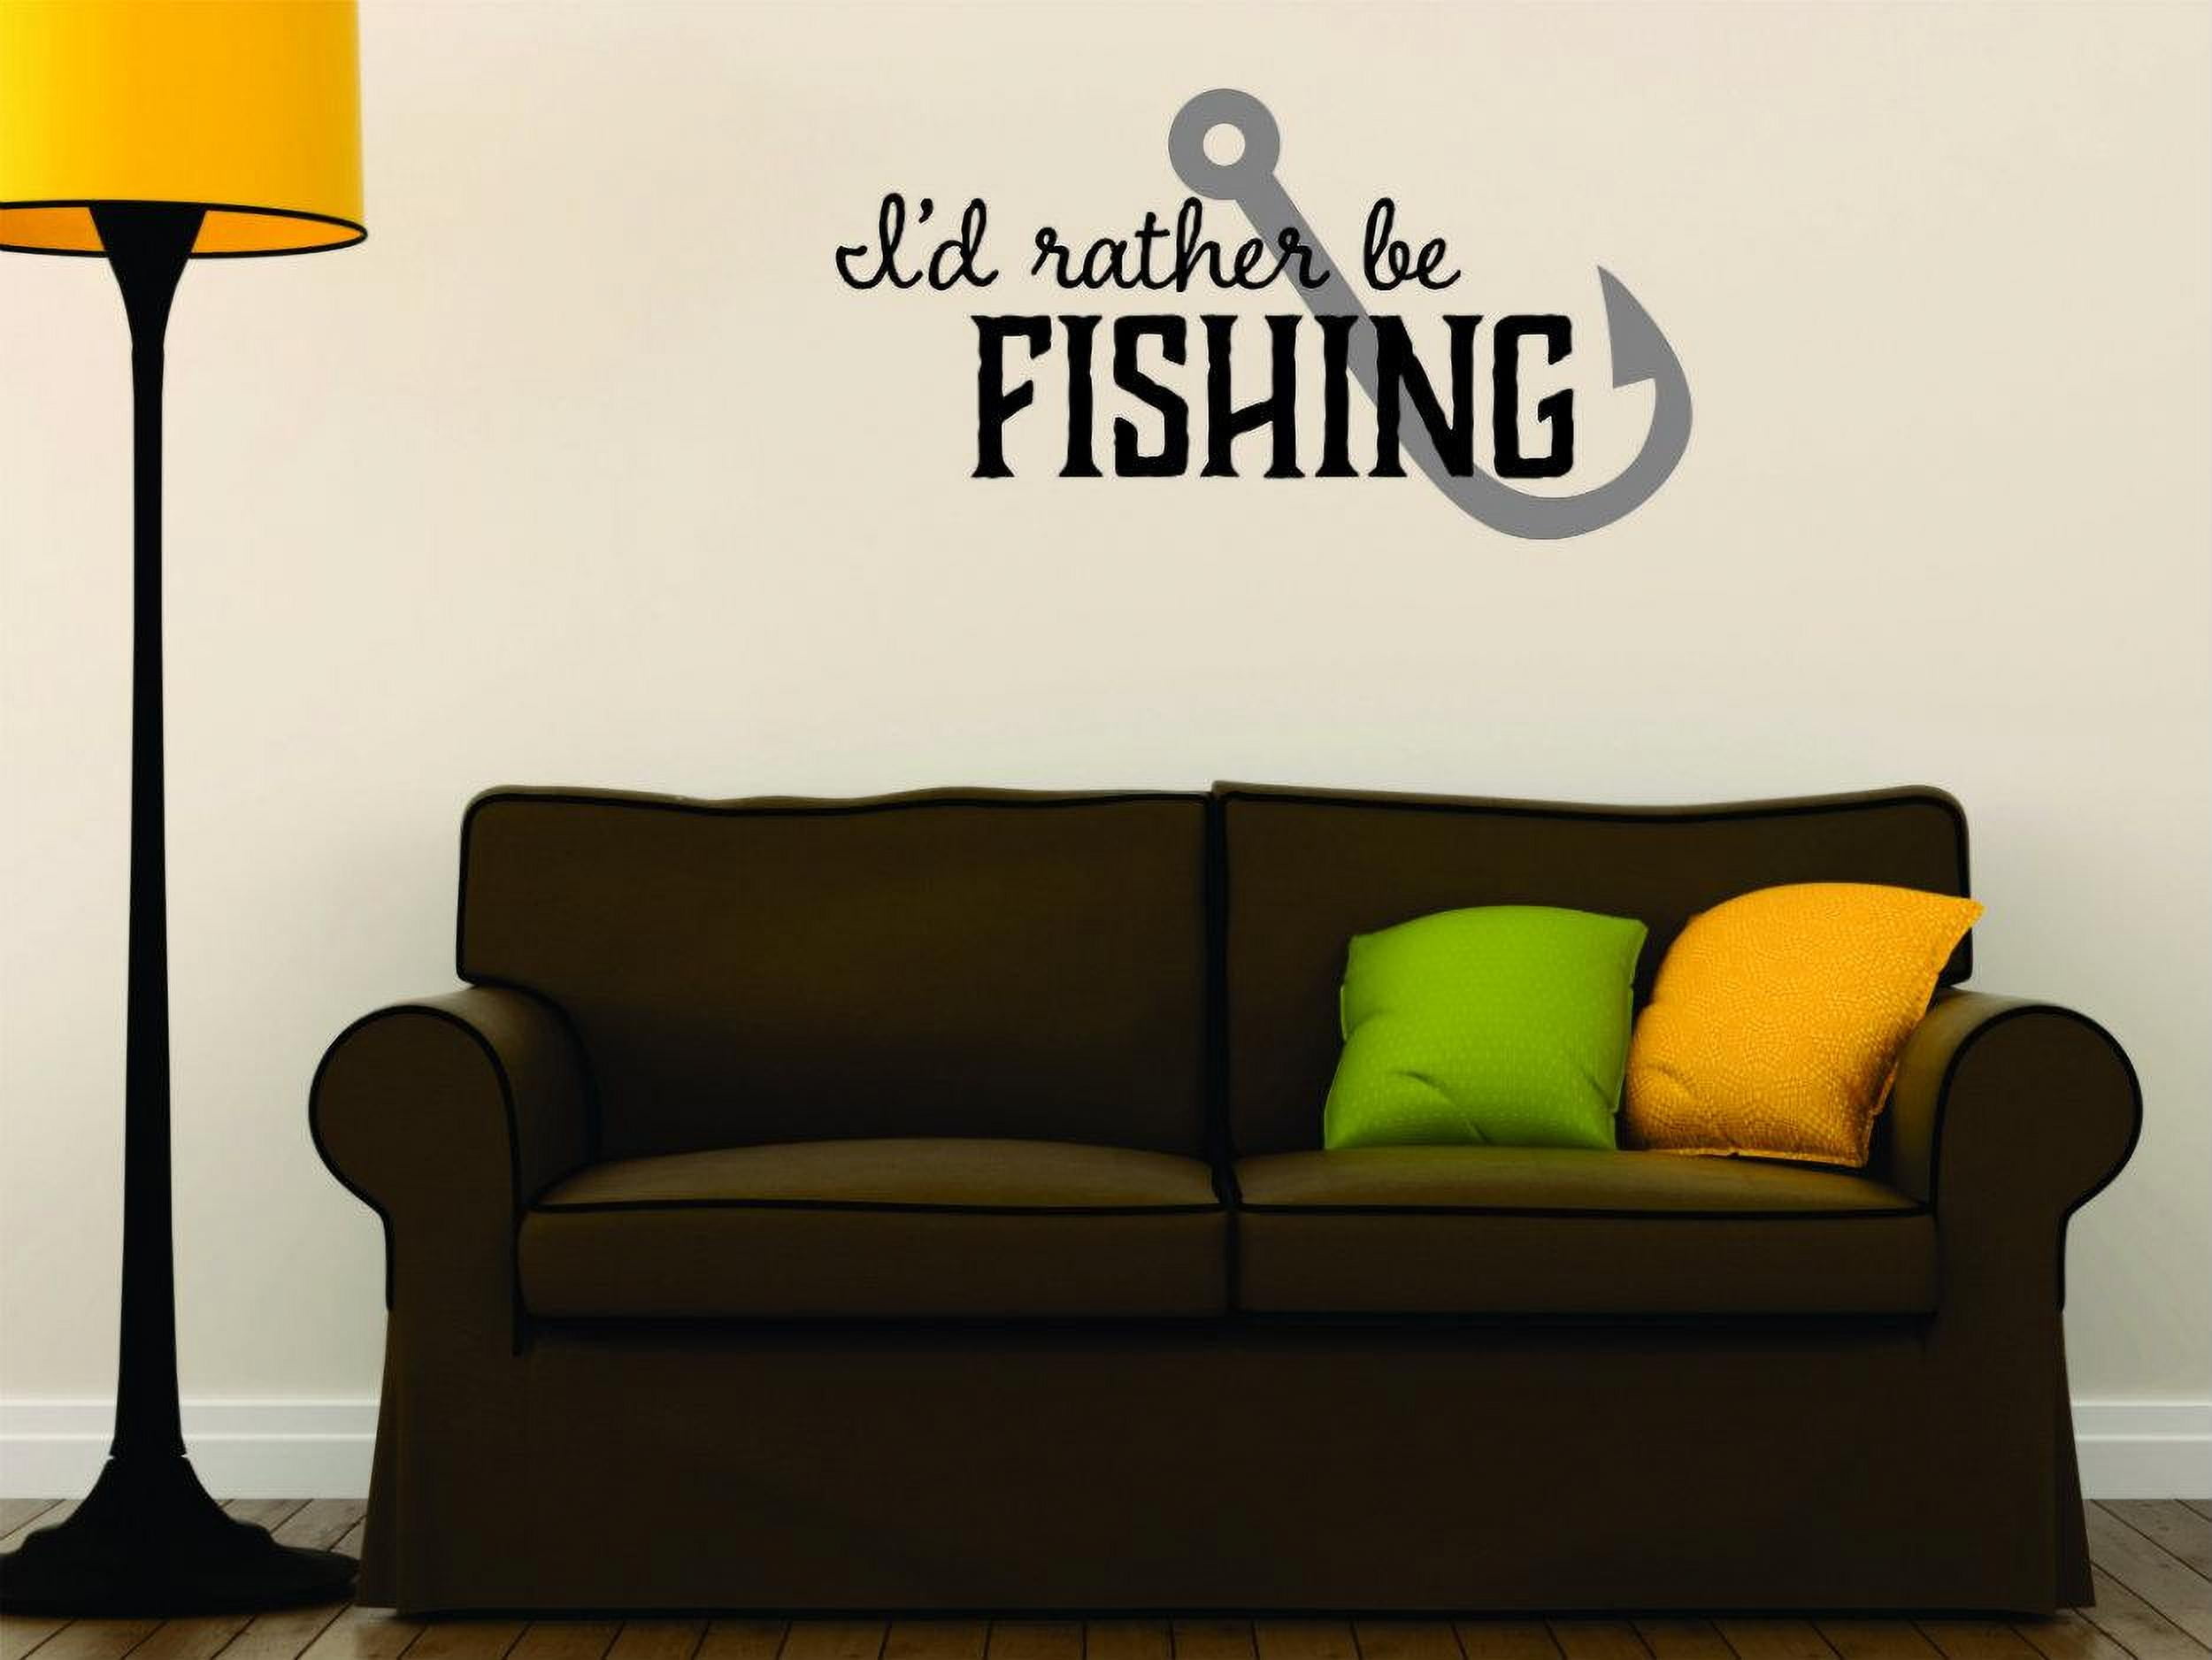  Fishing Bedroom Decorations